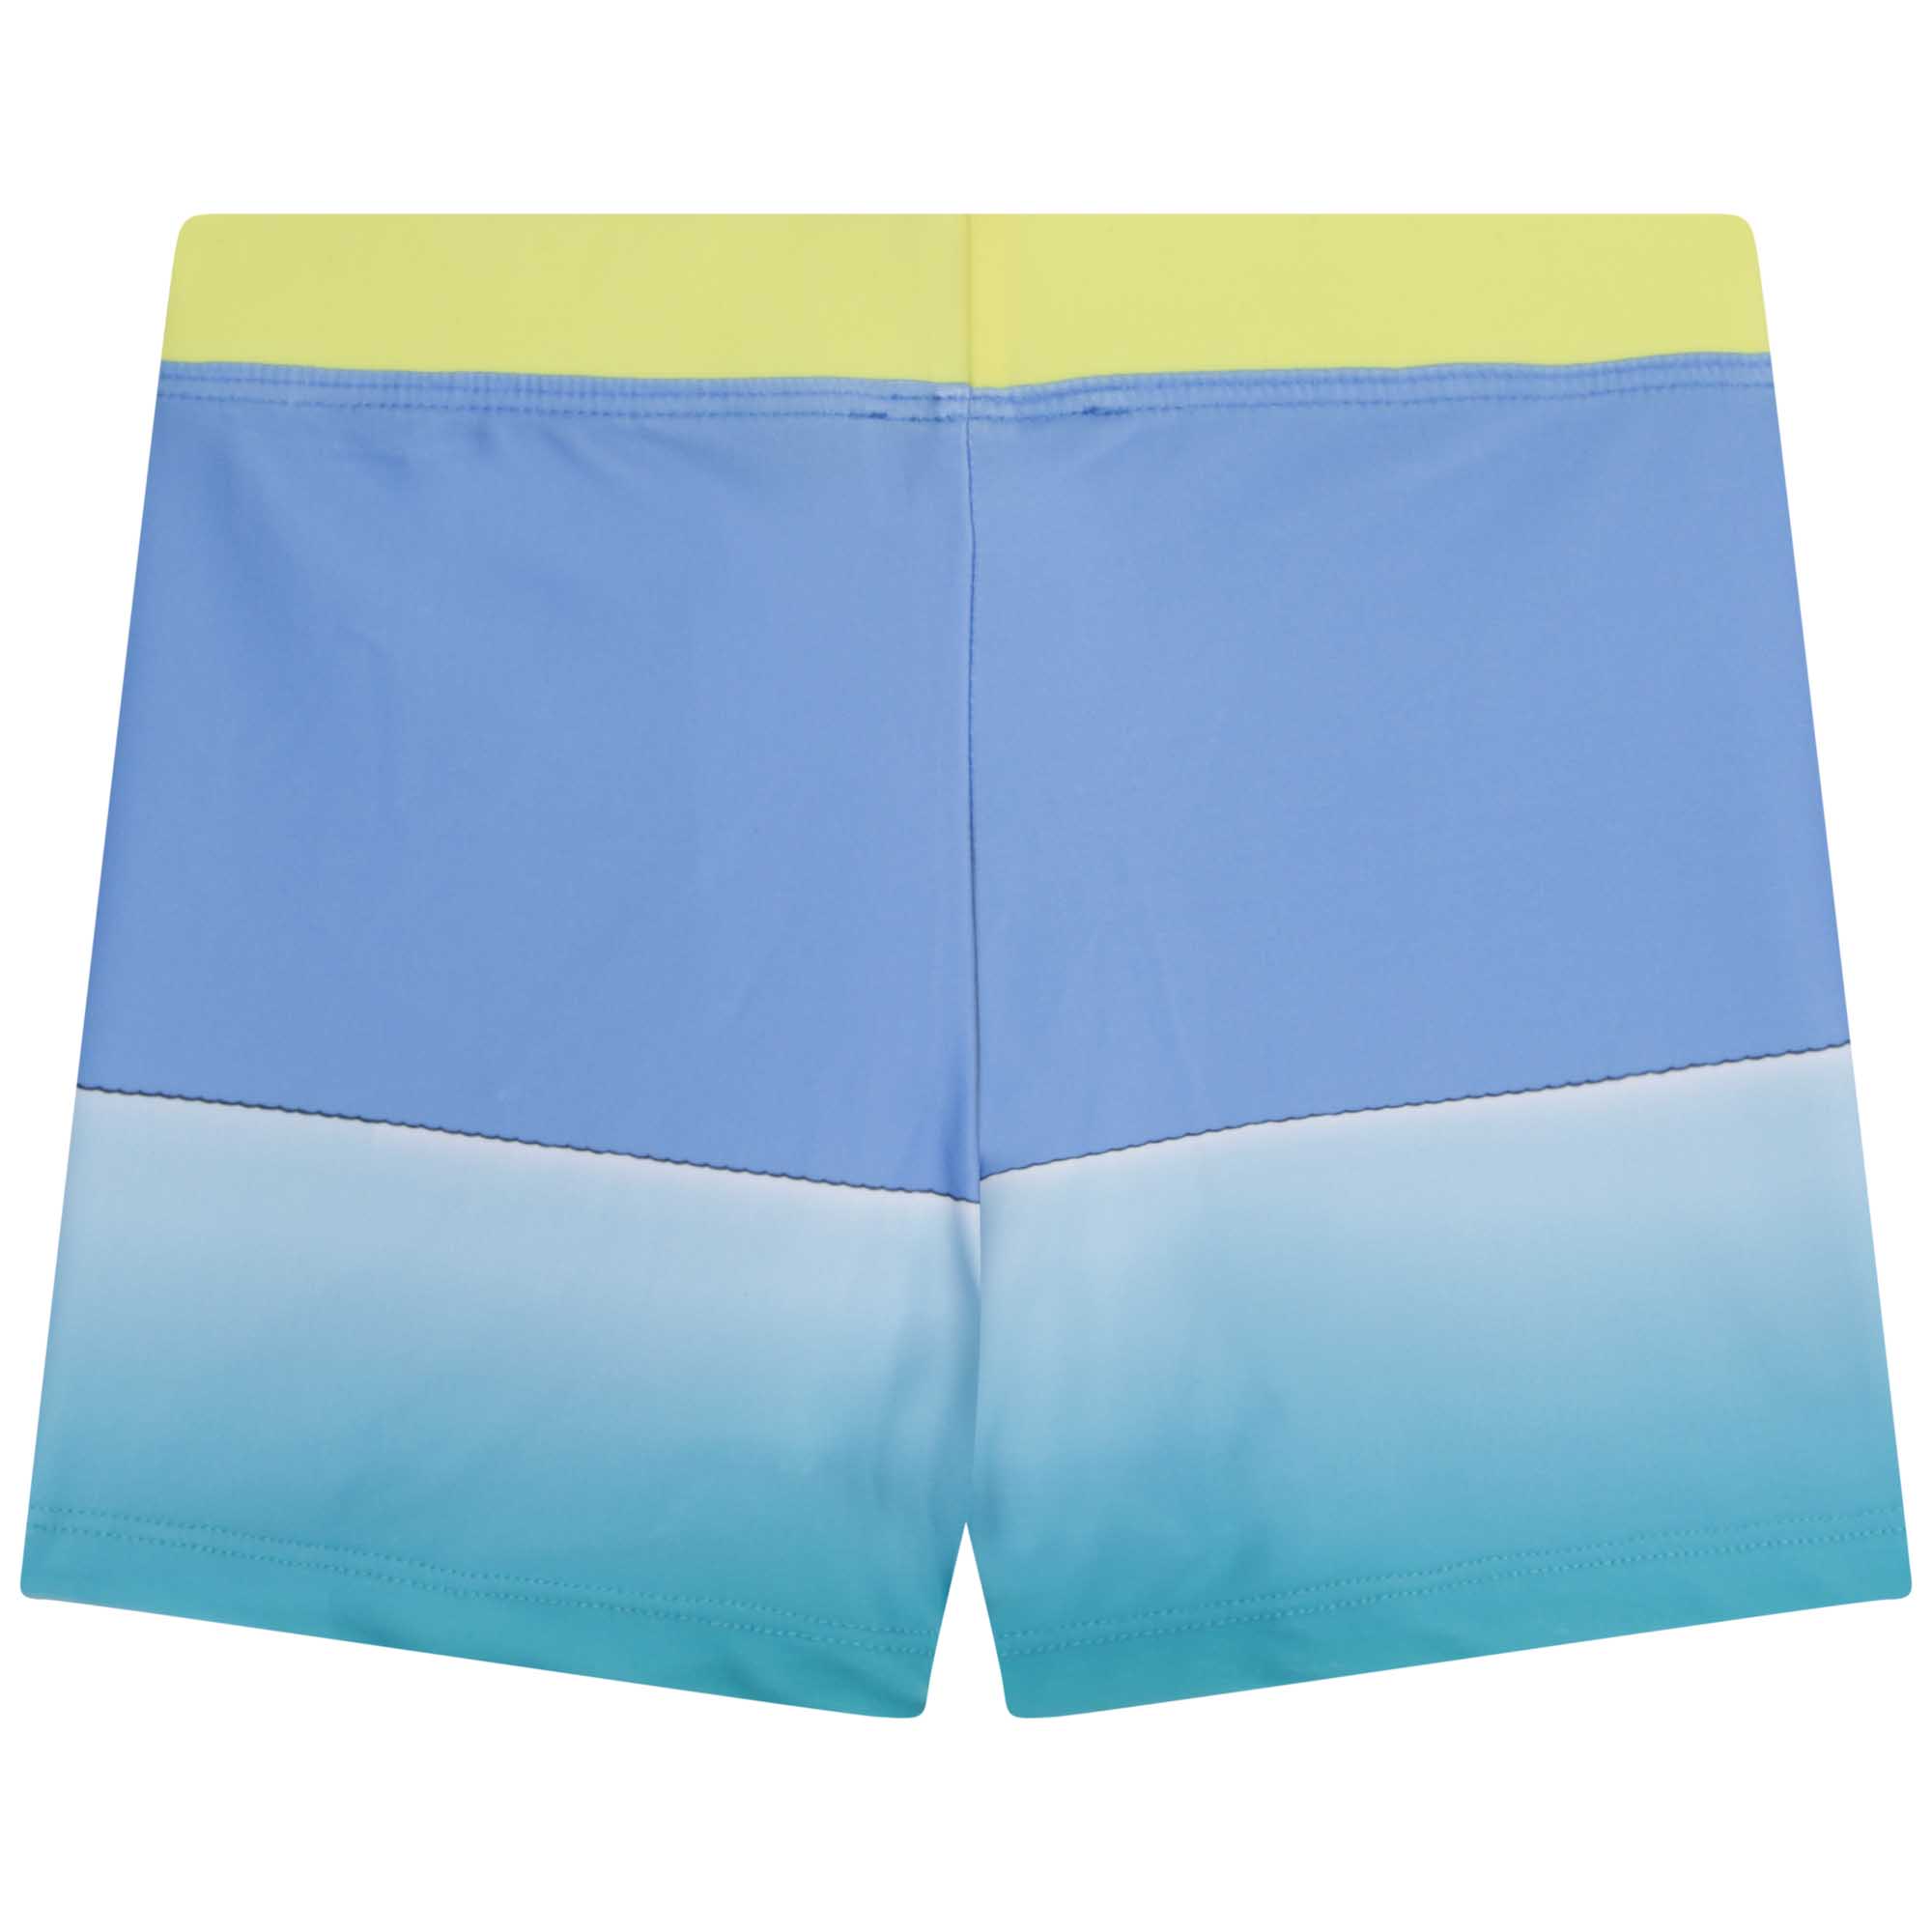 Novelty swim shorts MARC JACOBS for BOY